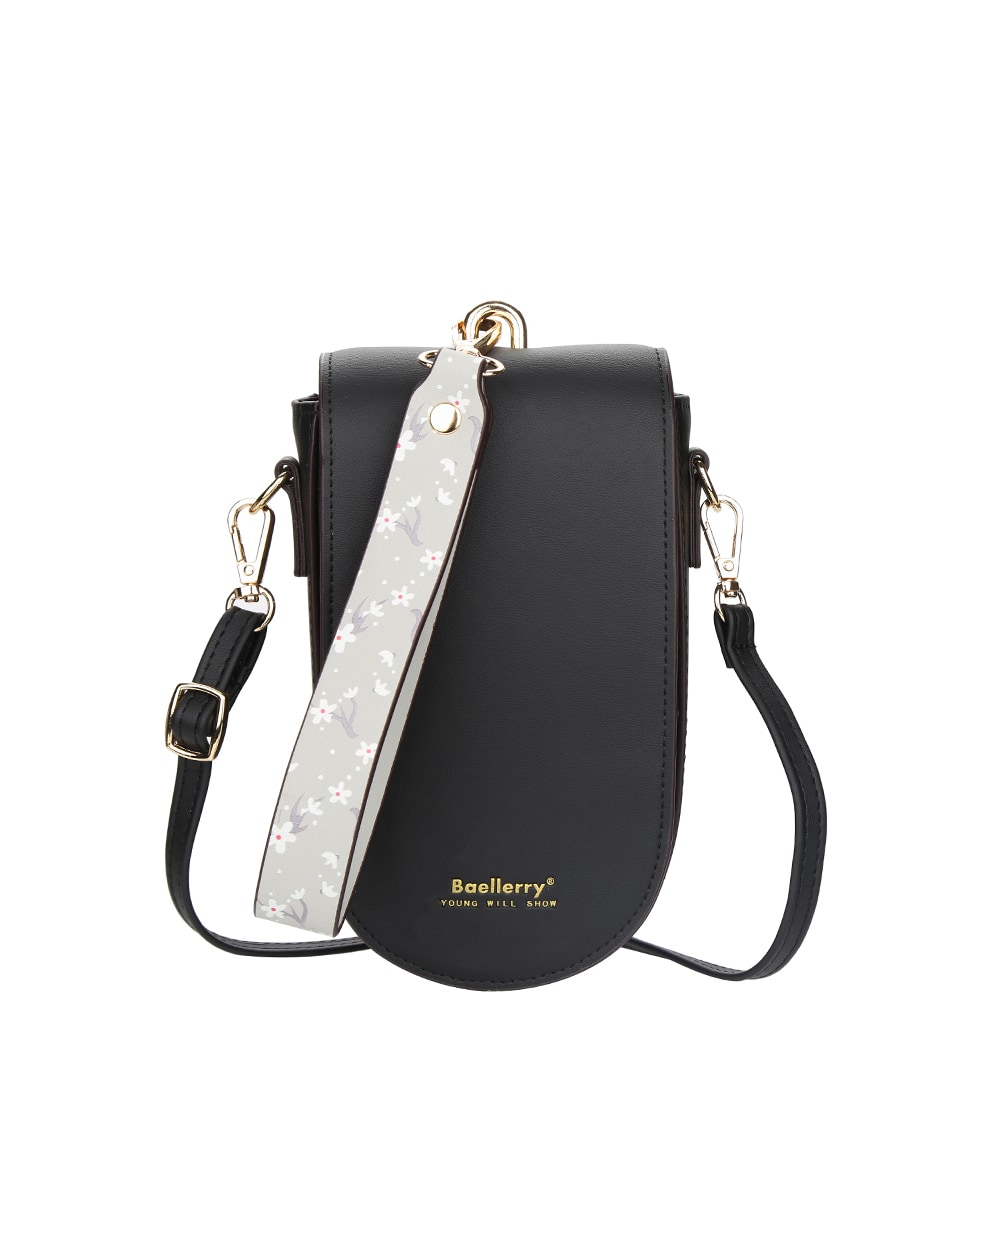 Baellerry-wallet-phone-pouch-bag-black.jpg